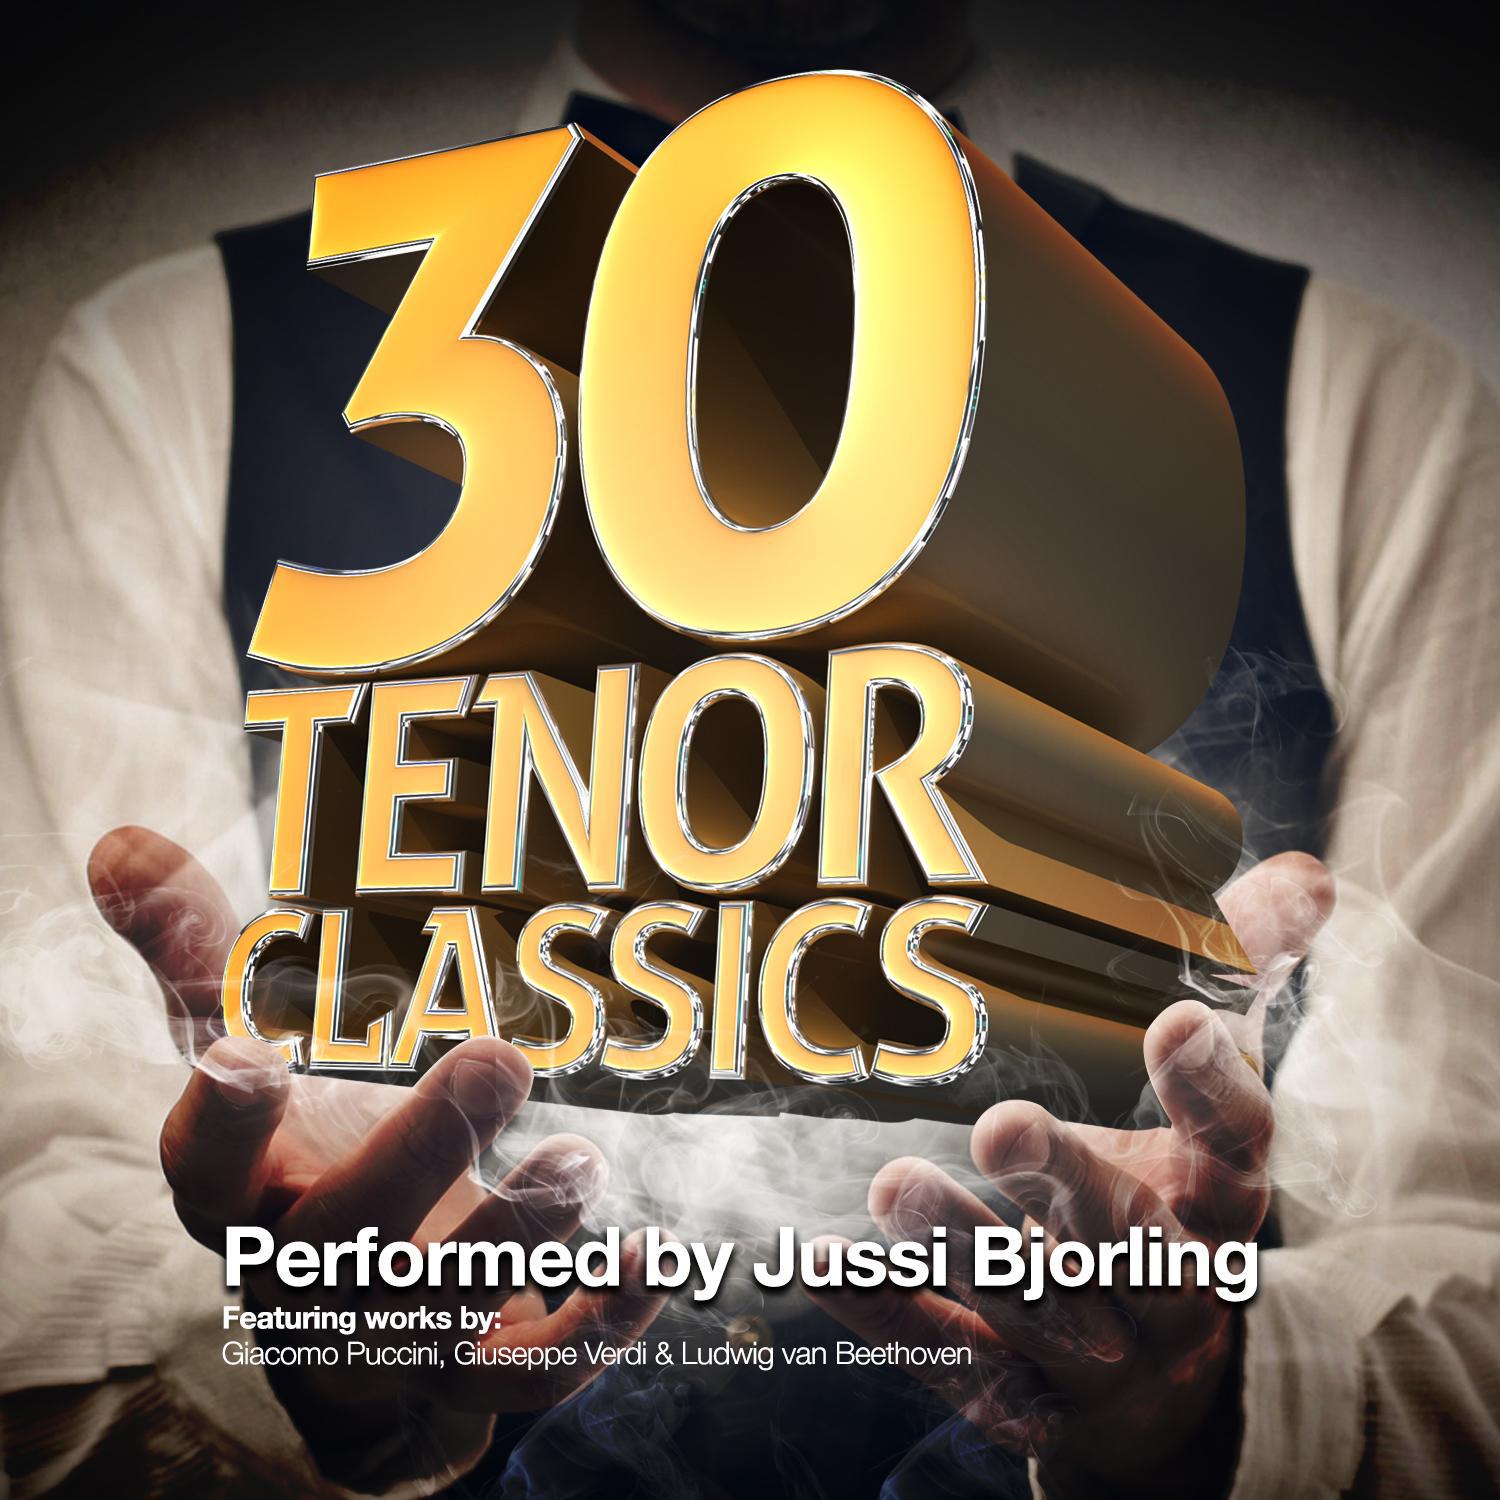 30 Tenor Classics... Performed by Jussi Bjorling